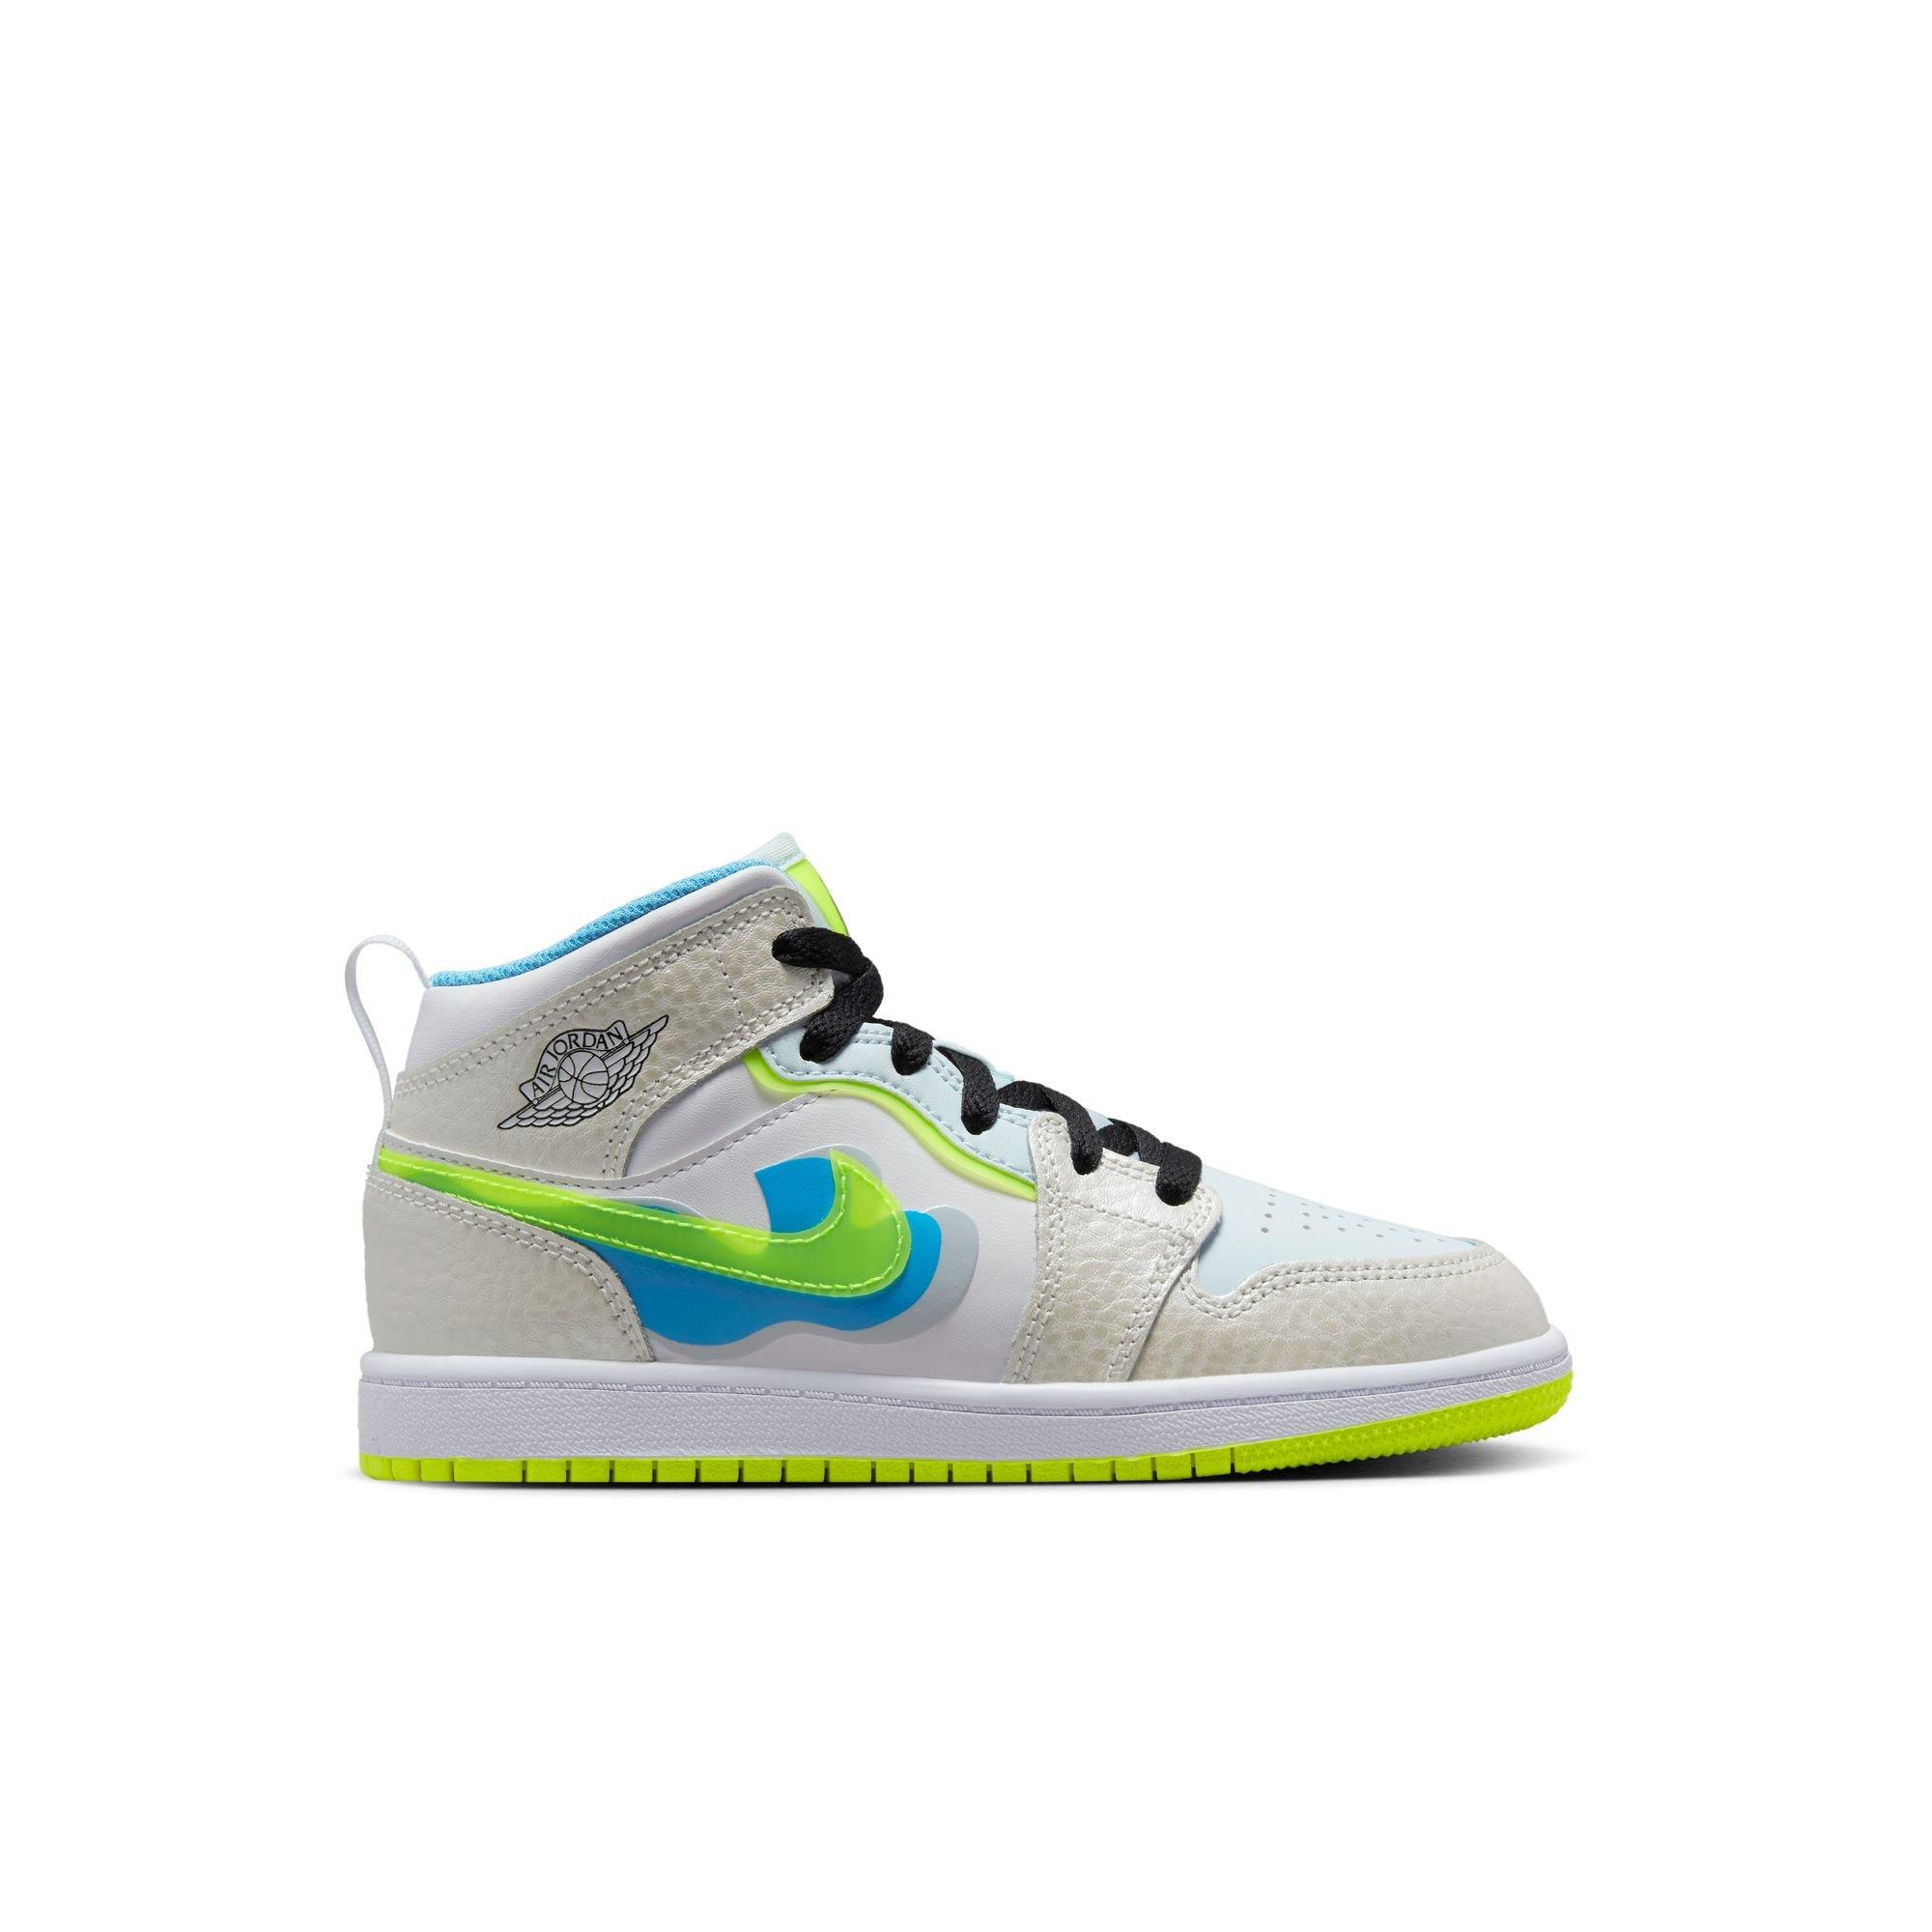 Air Jordan Shoes & Sneakers - Low, Mid, High - Hibbett